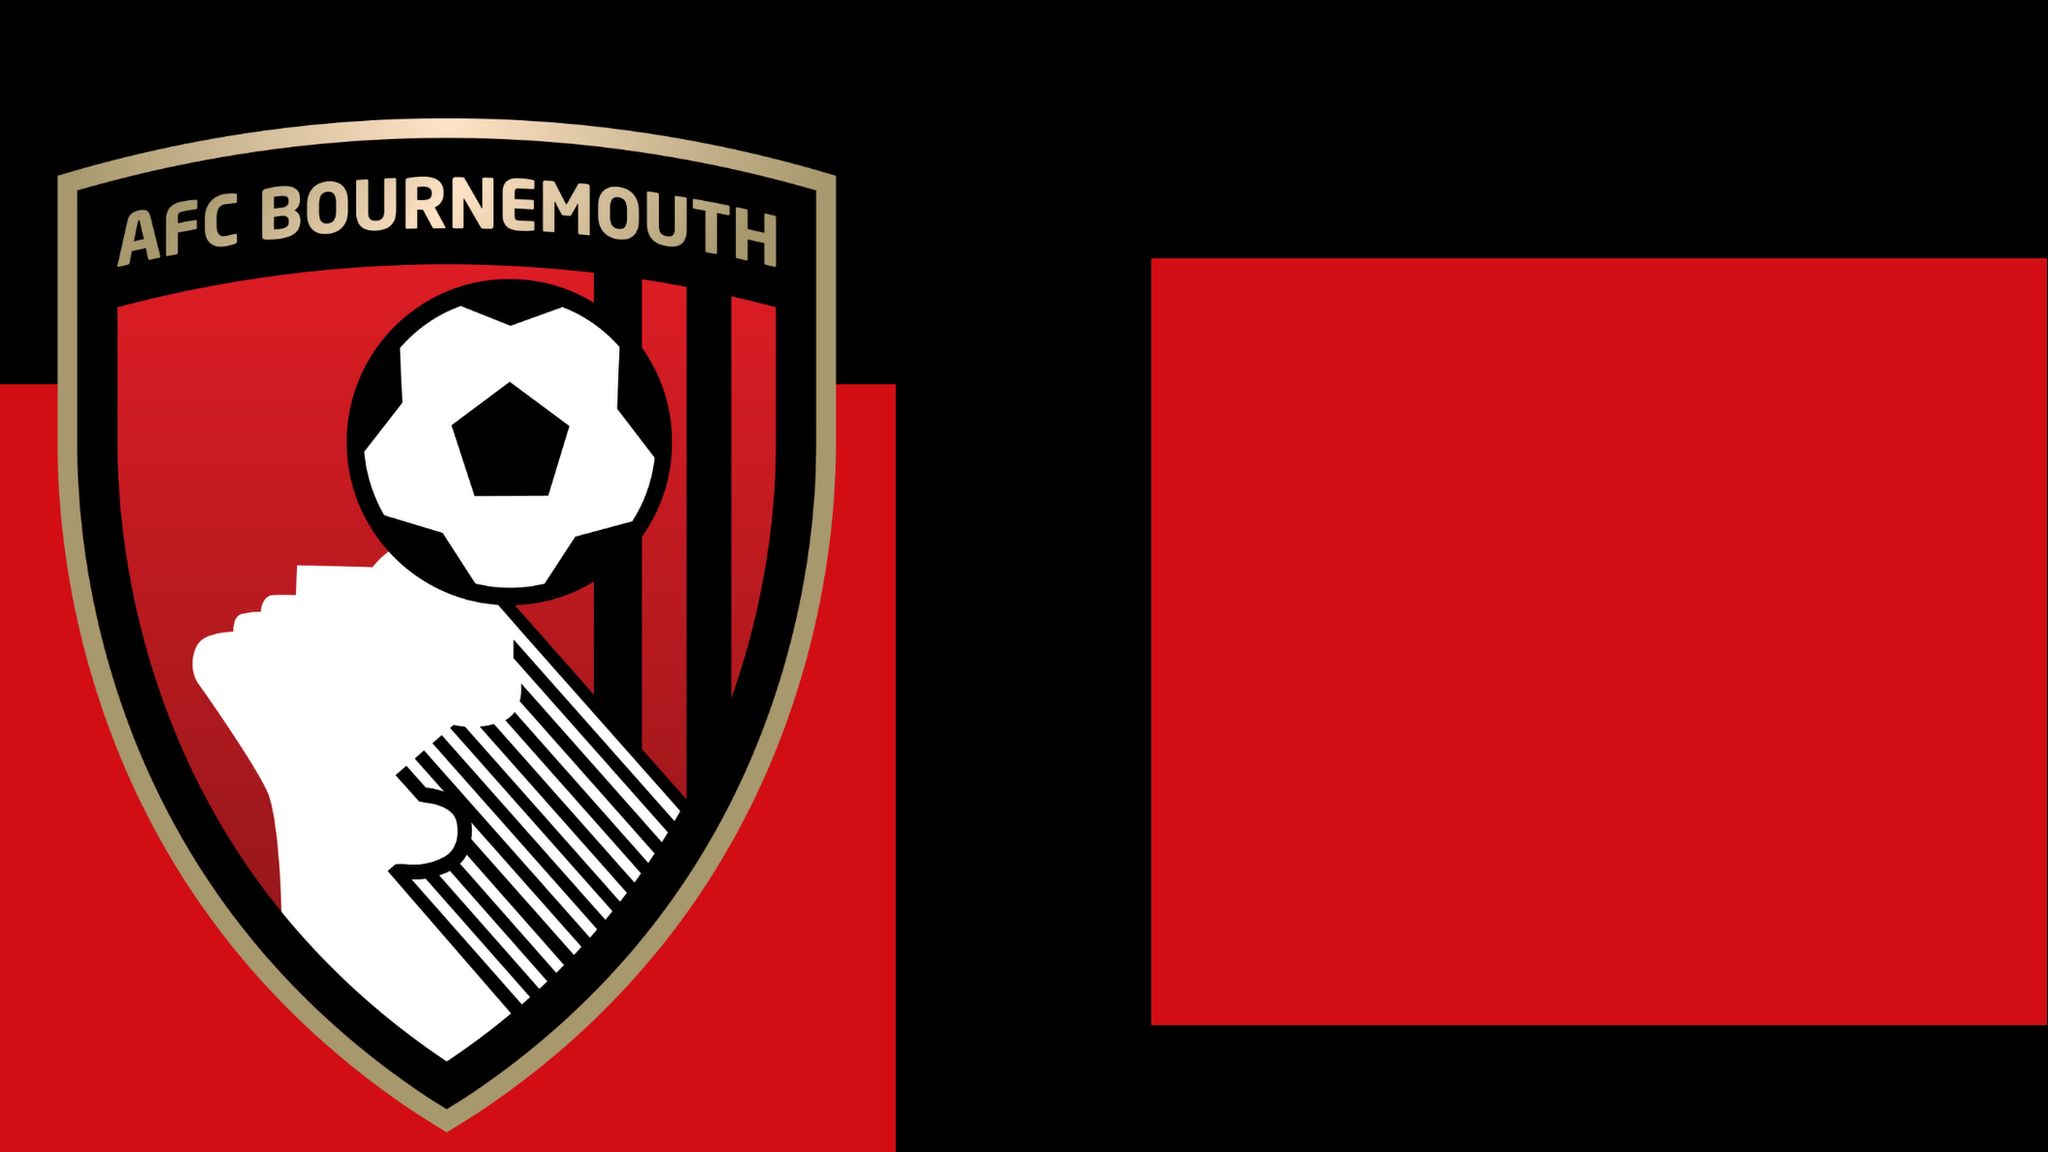 Bournemouth club badge